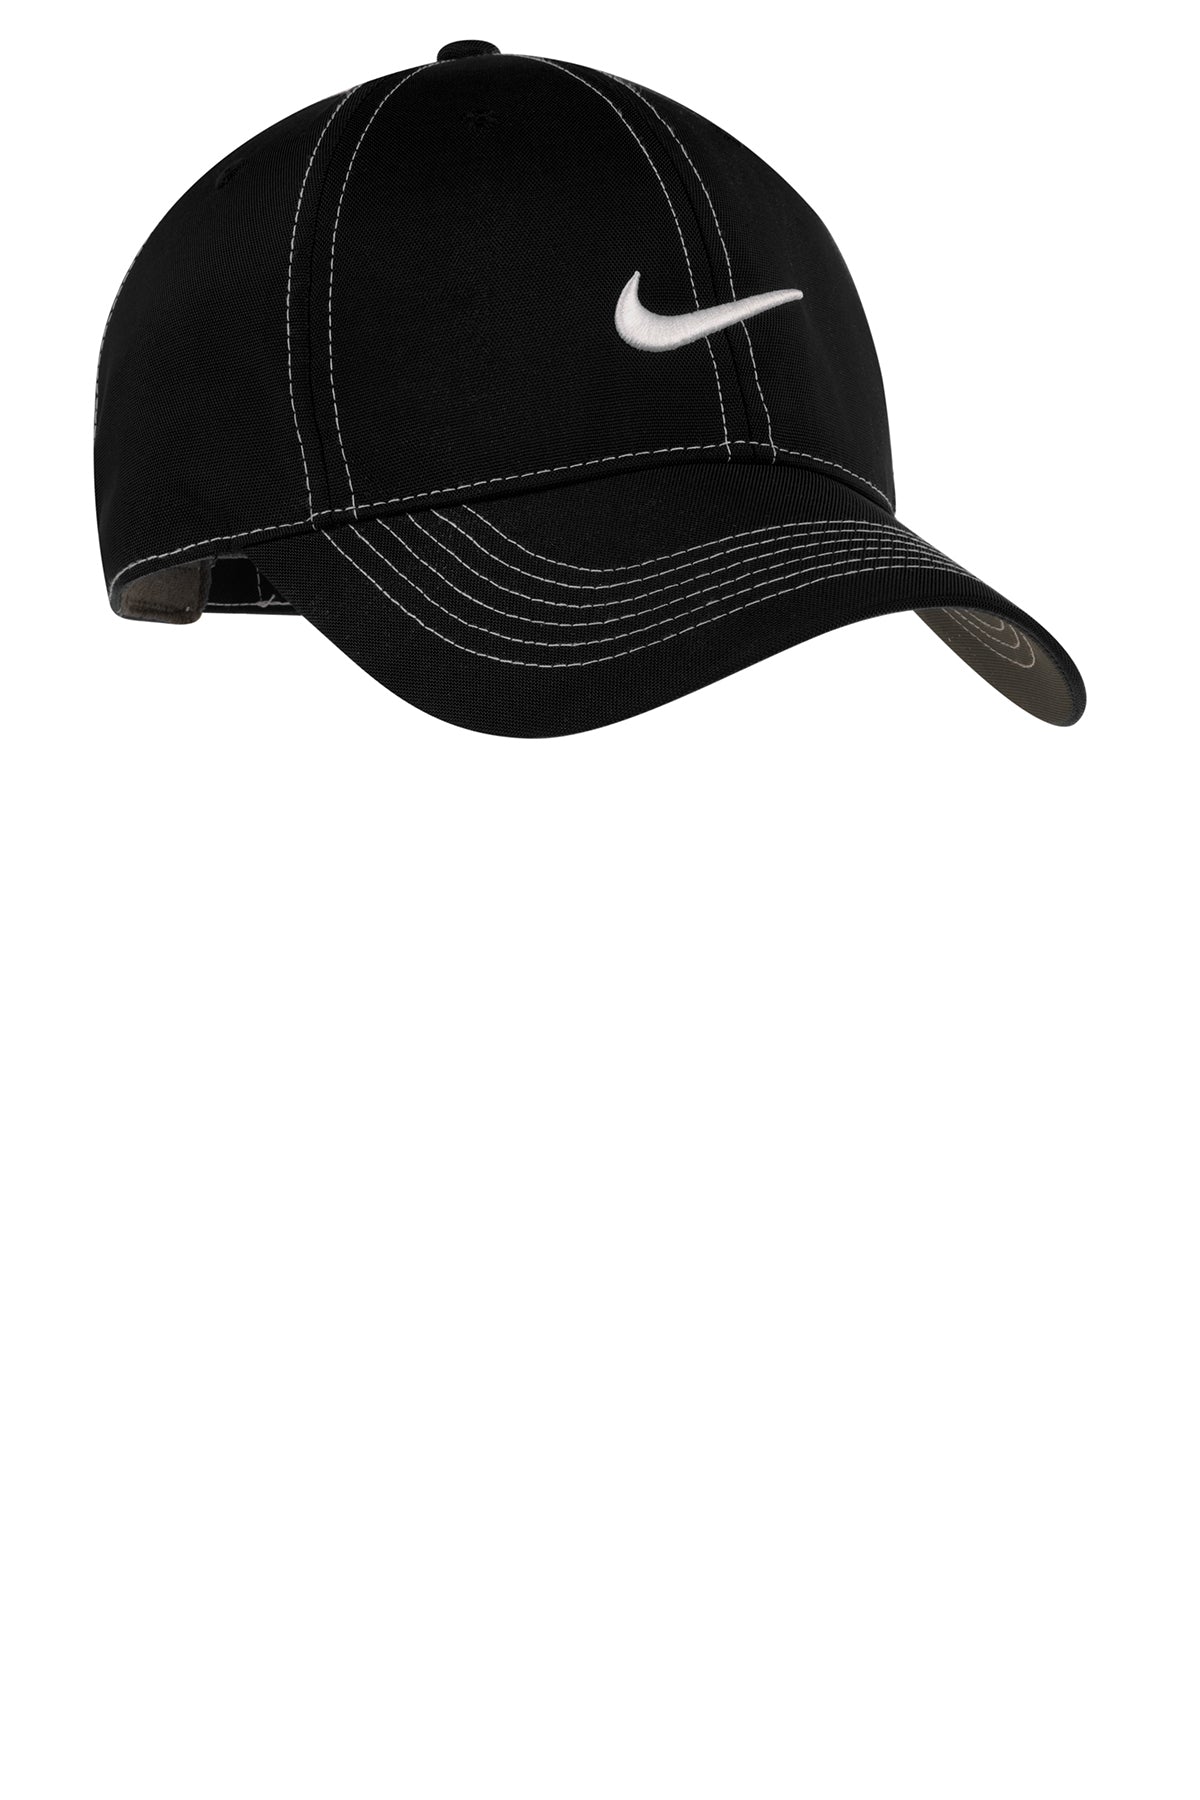 Nike Swoosh Front Customized Caps, Black